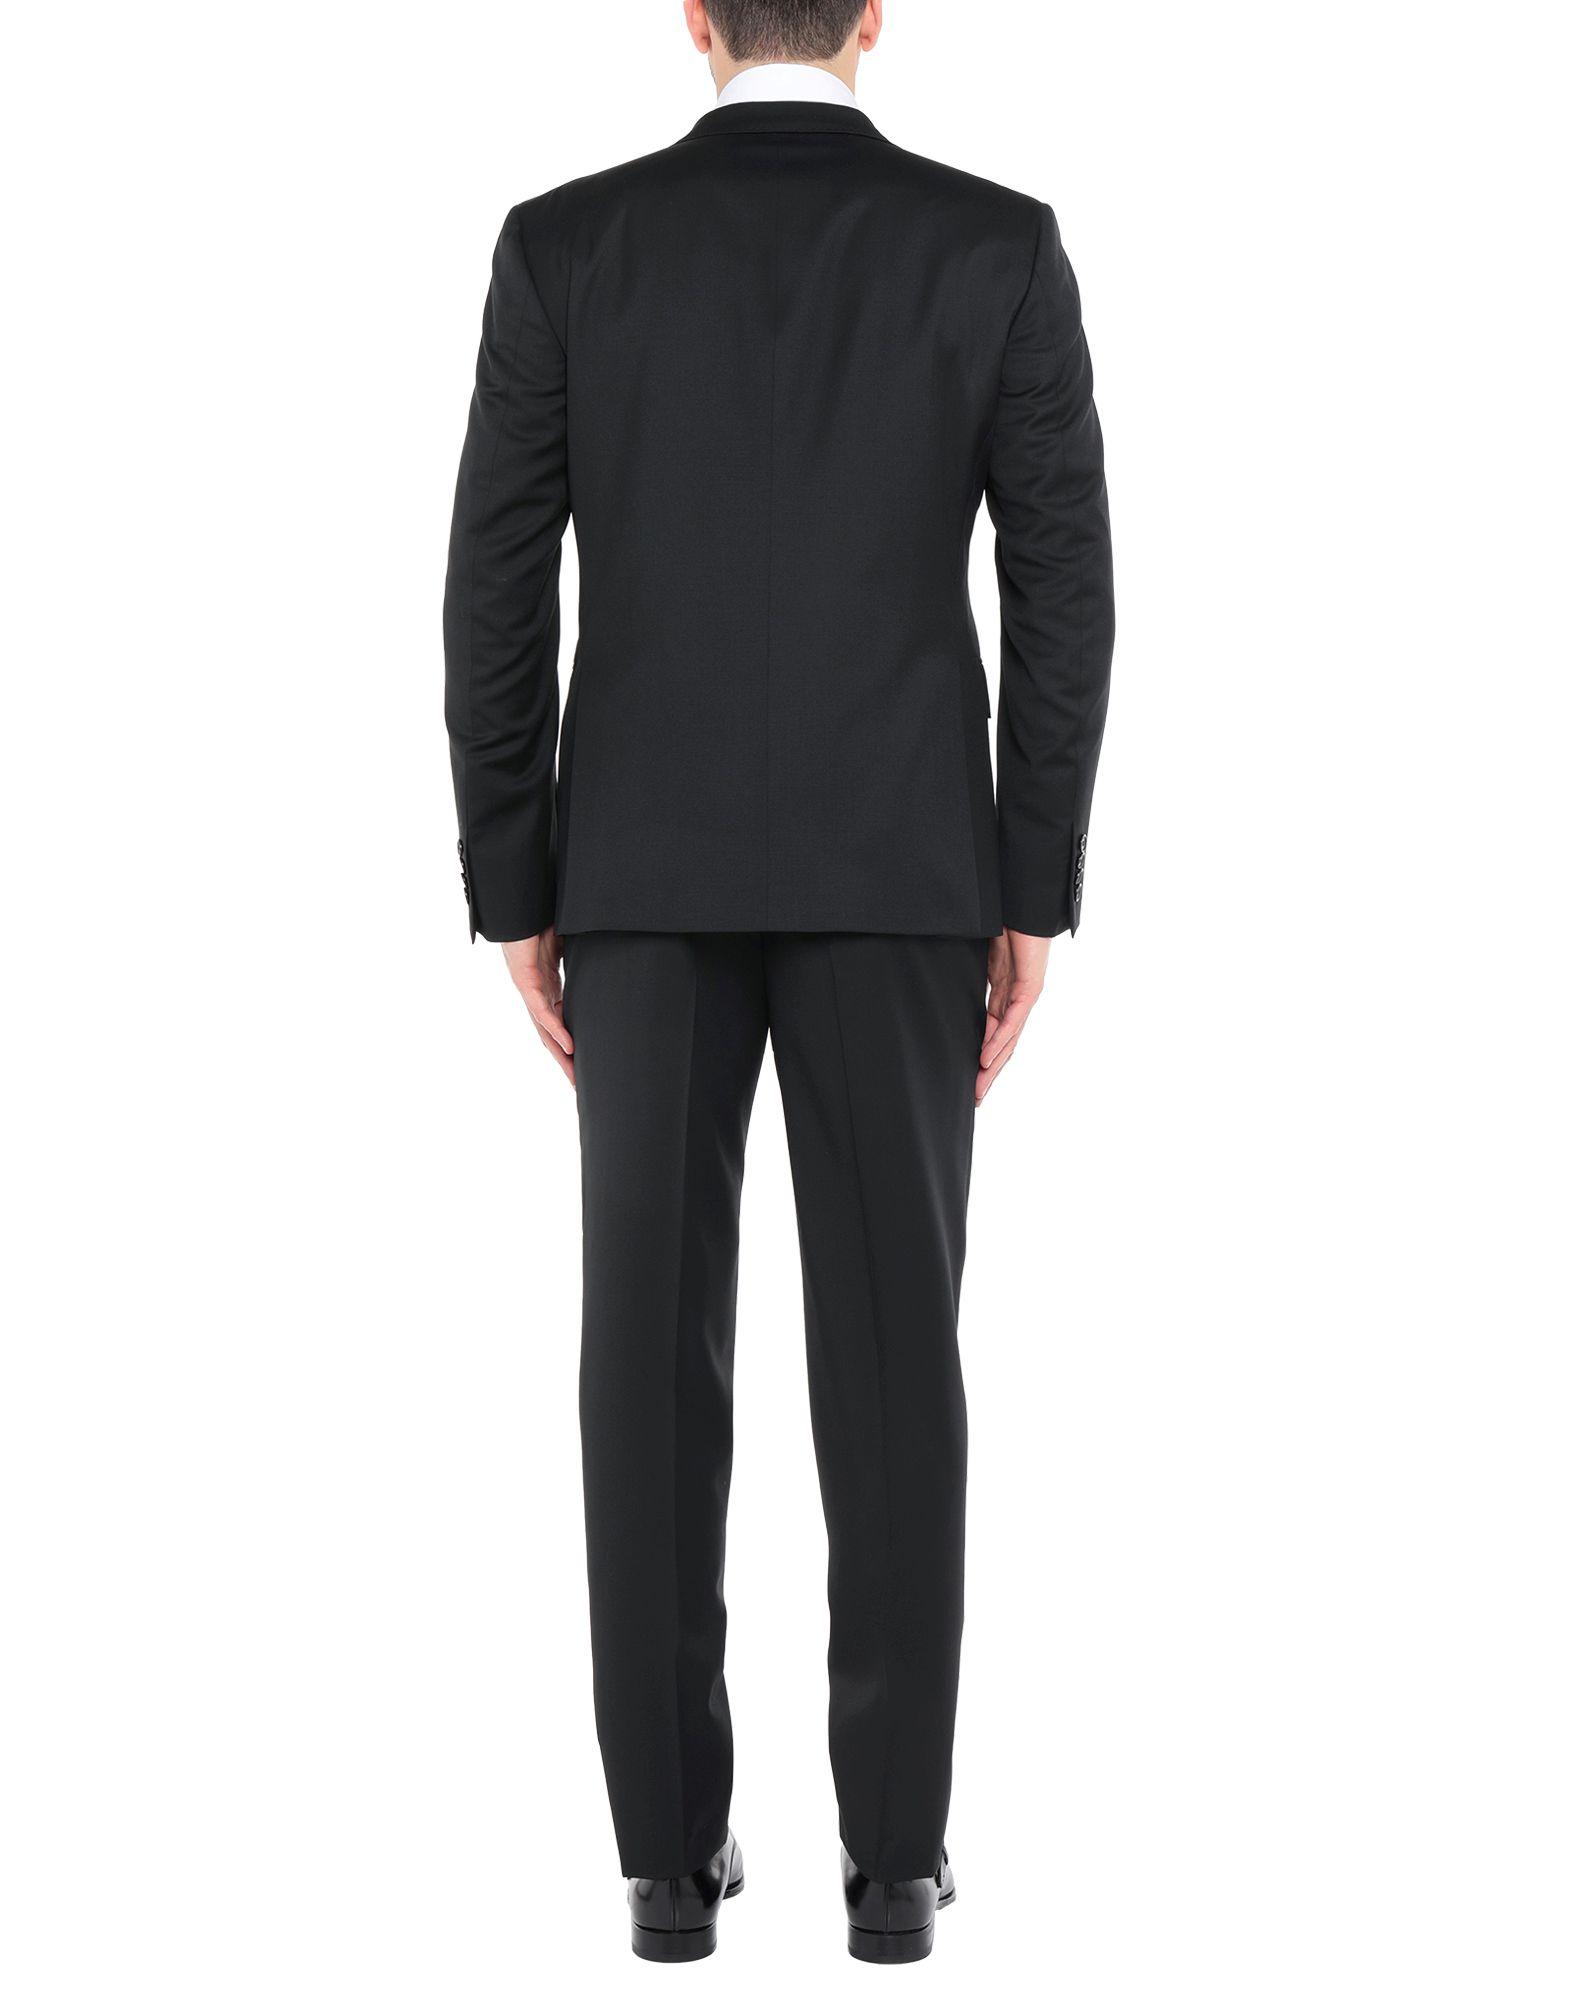 Roberto Cavalli Suit in Black for Men - Lyst